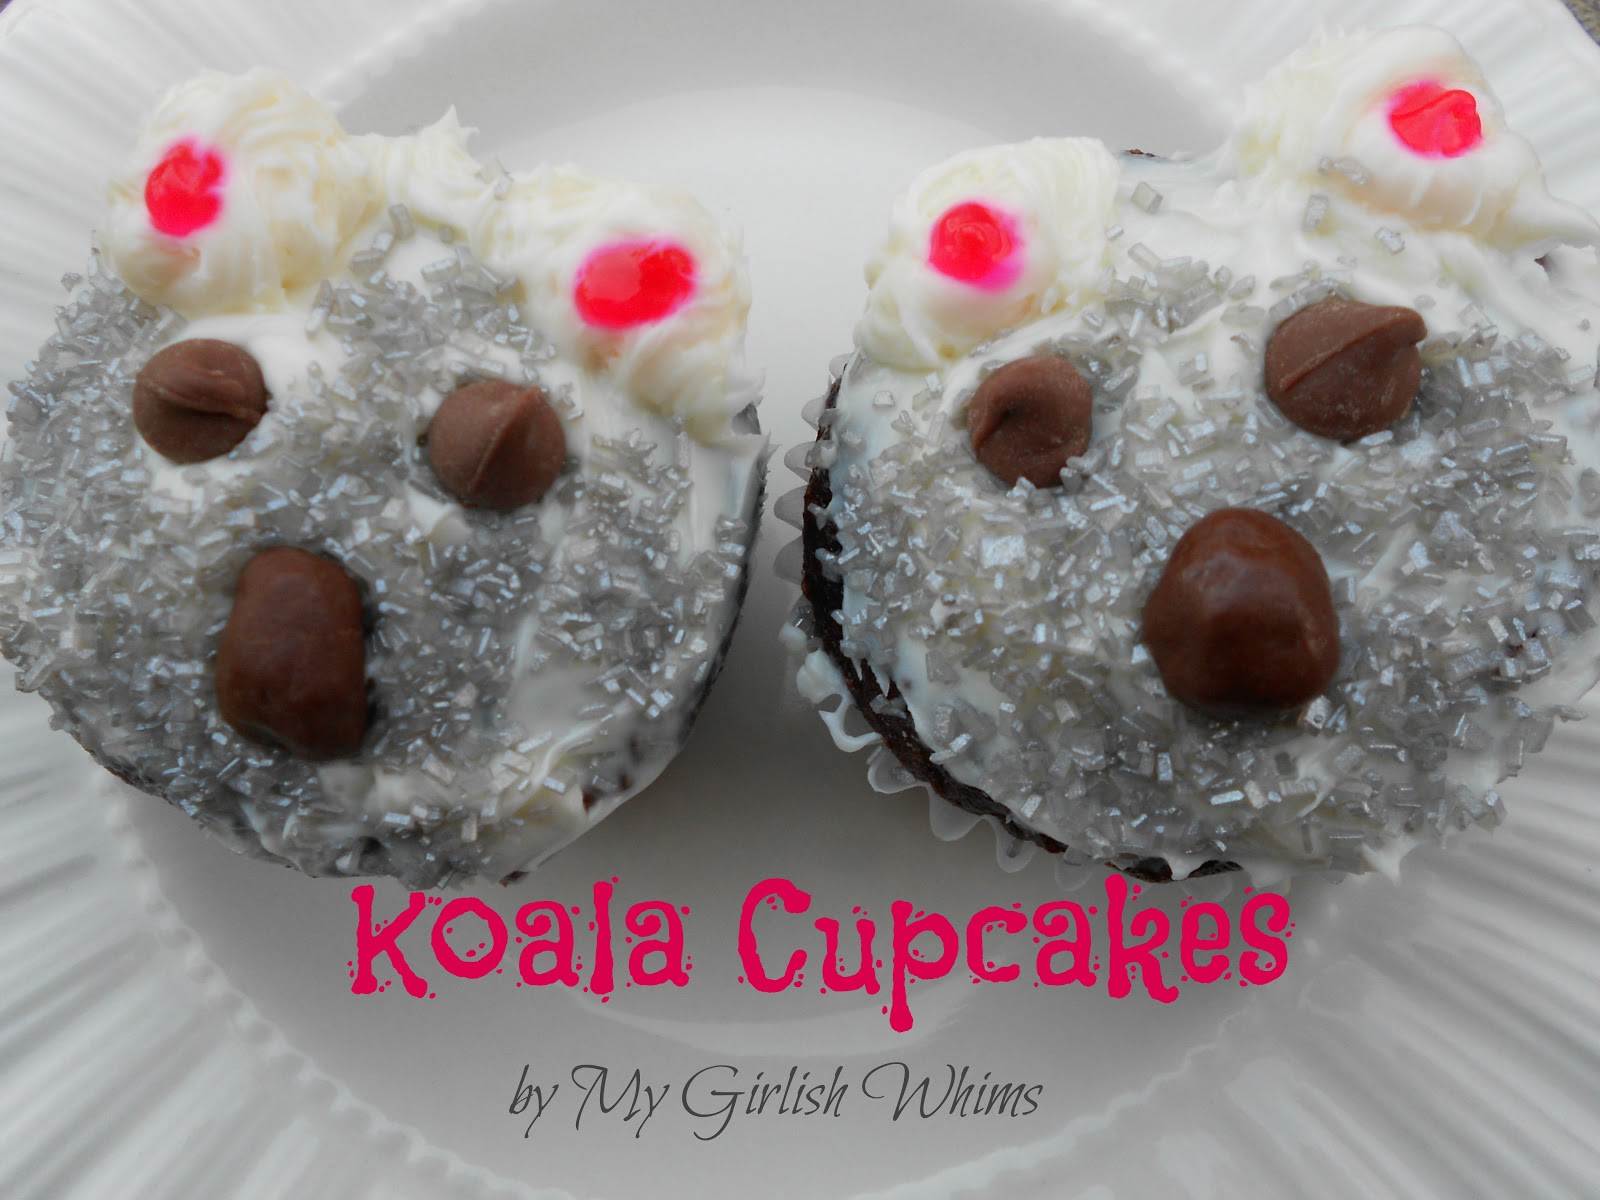 http://2.bp.blogspot.com/-k0gCA8VwD2k/UIAV1KOcVkI/AAAAAAAAFI8/LlgfzzBh3mw/s1600/Koala%2BCupcakes%2BDIY.jpg